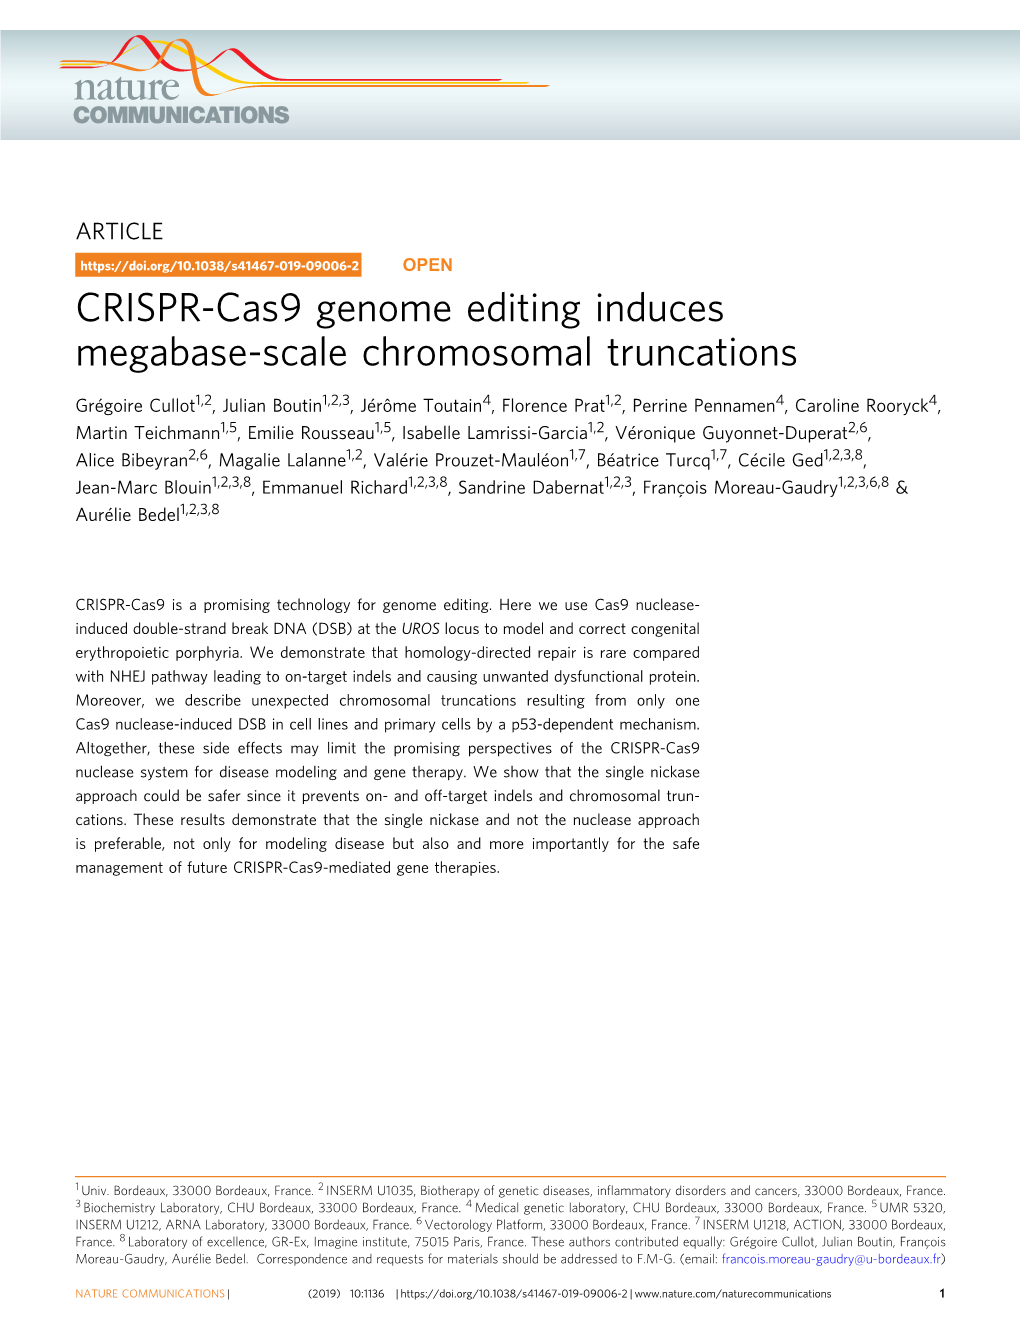 CRISPR-Cas9 Genome Editing Induces Megabase-Scale Chromosomal Truncations